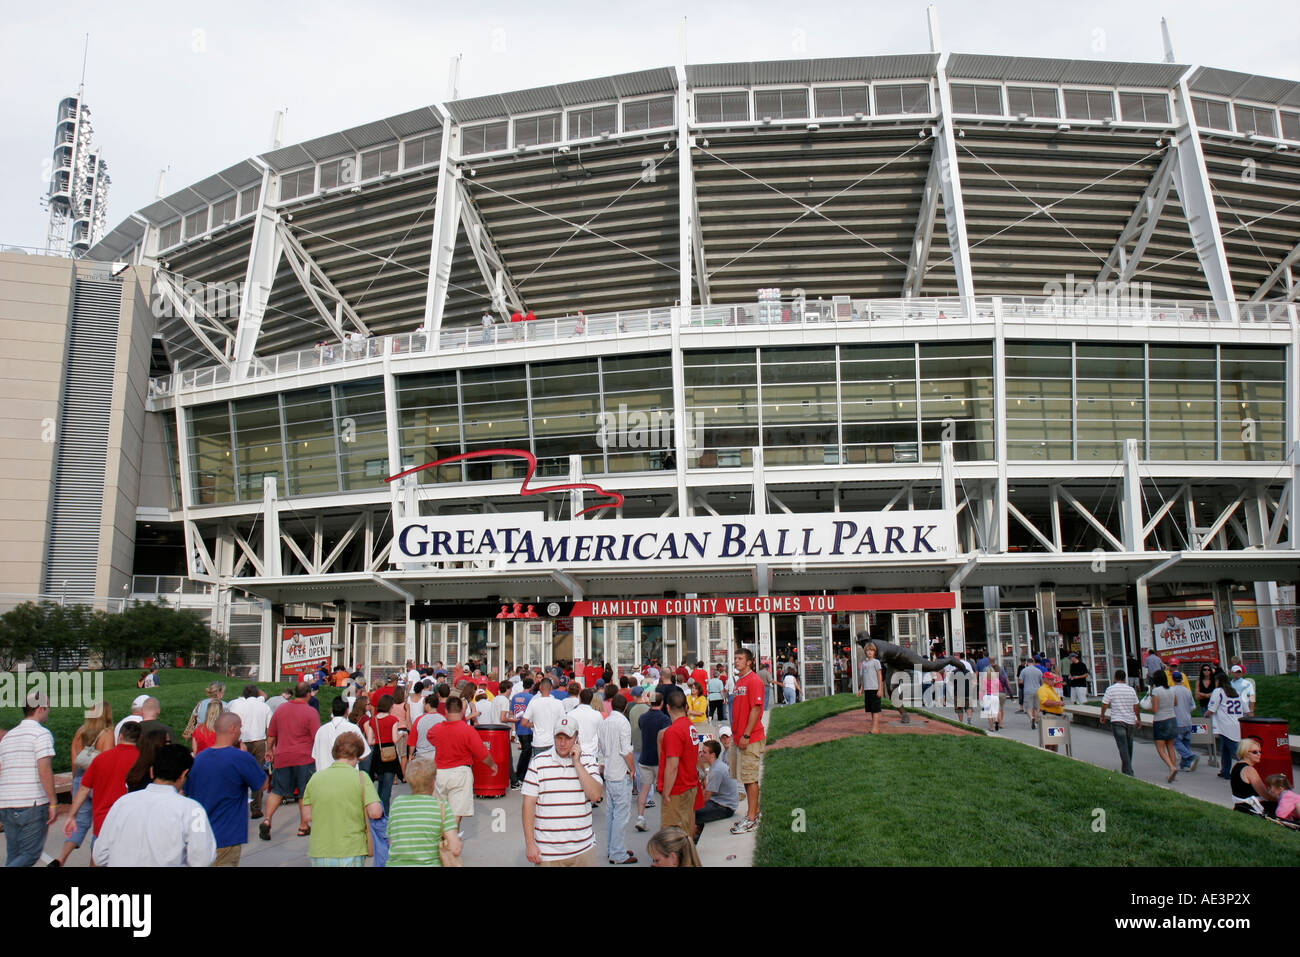 Cincinnati Ohio,Great American Ball Park,Reds,Major League Baseball,stadium,fans,OH070728106 Stock Photo